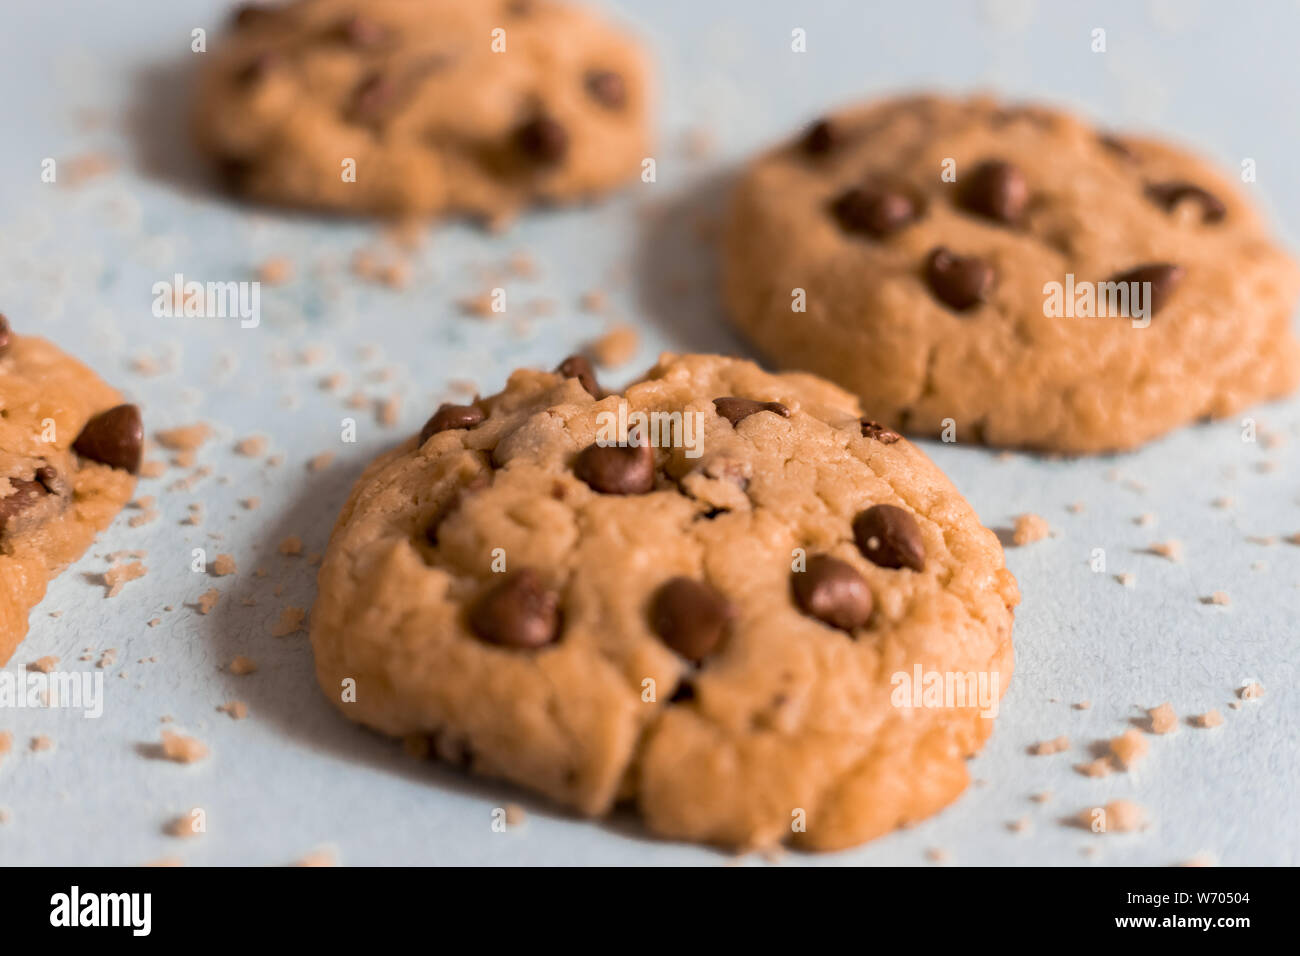 Choco crisp cookies / galletas con chispas de chocolate / chococrisp galletas reposteria dulces sweet Stock Photo